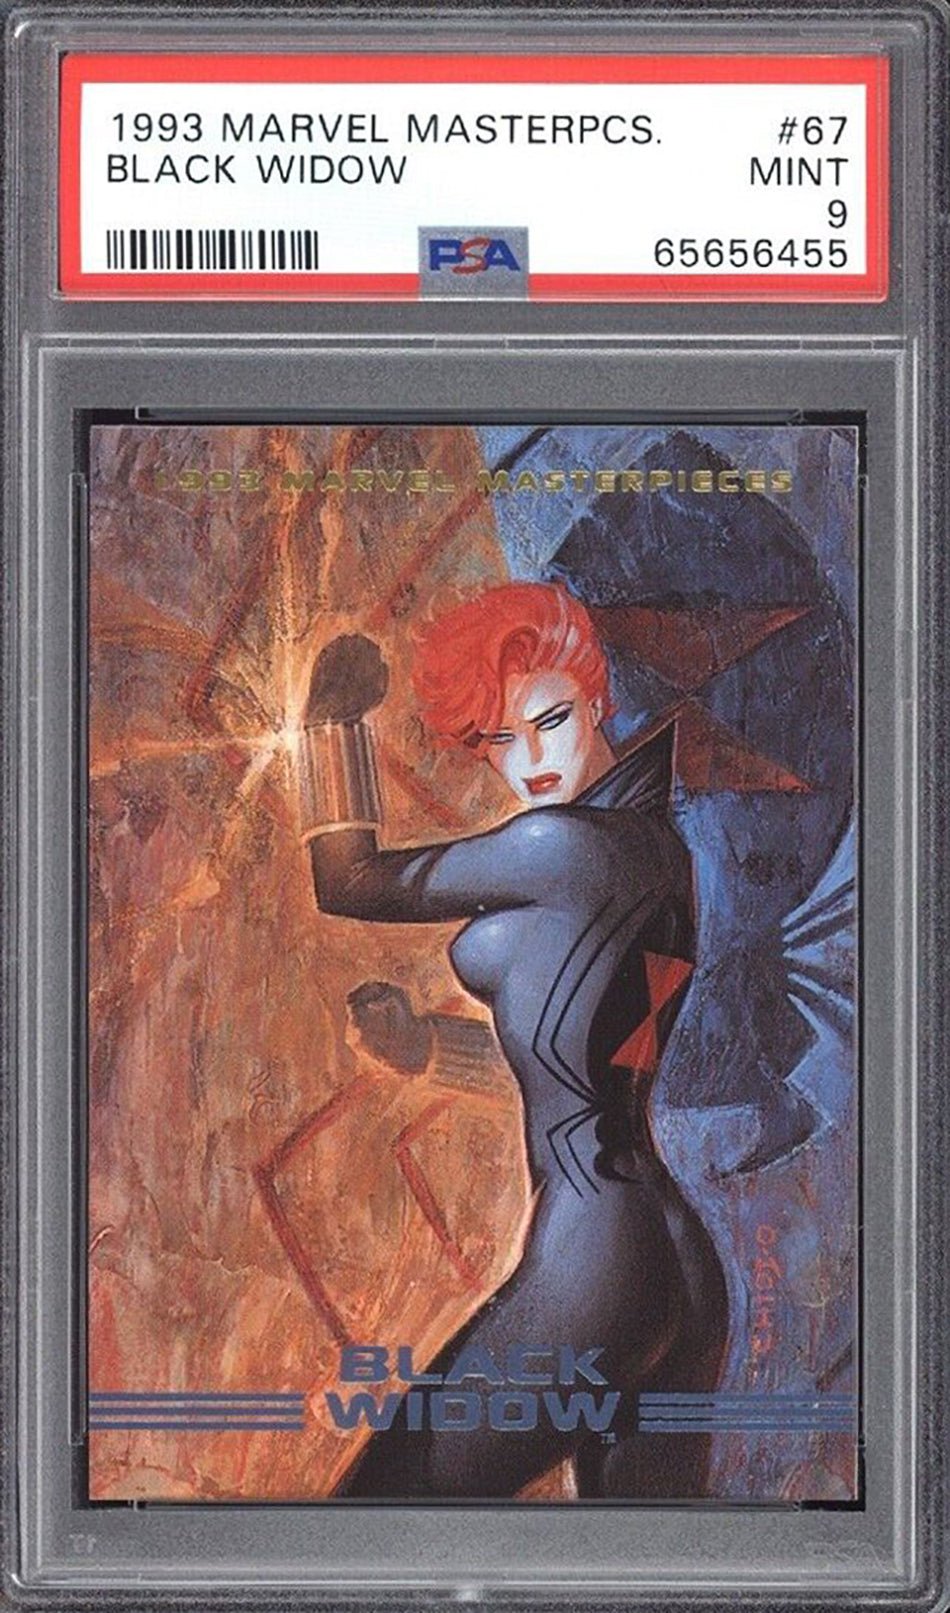 BLACK WIDOW PSA 9 1993 Marvel Masterpieces #67 C1 Marvel Base Graded Cards - Hobby Gems